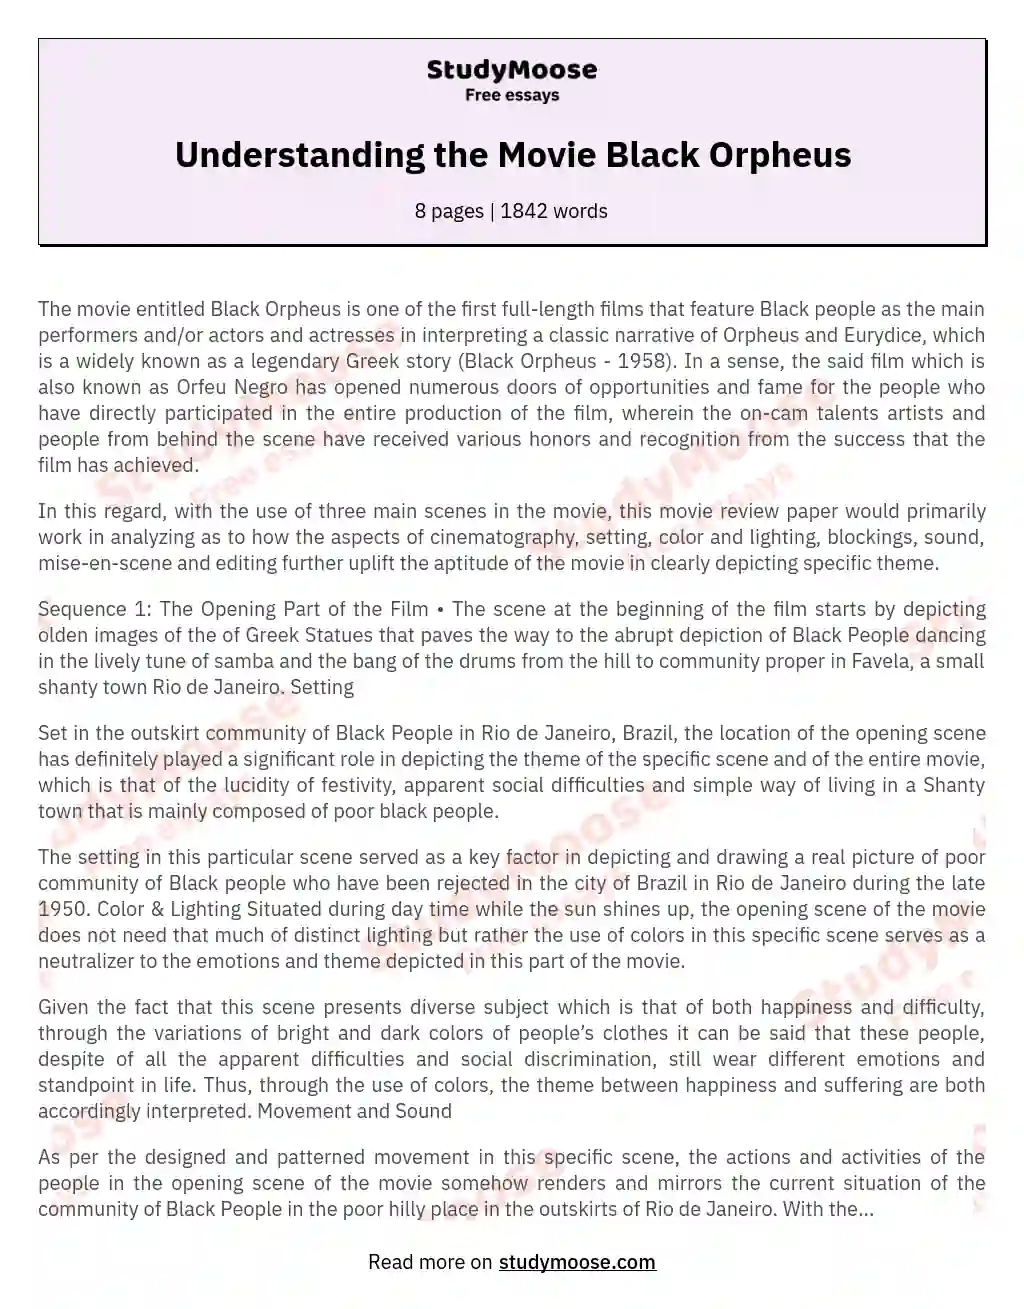 Understanding the Movie Black Orpheus essay